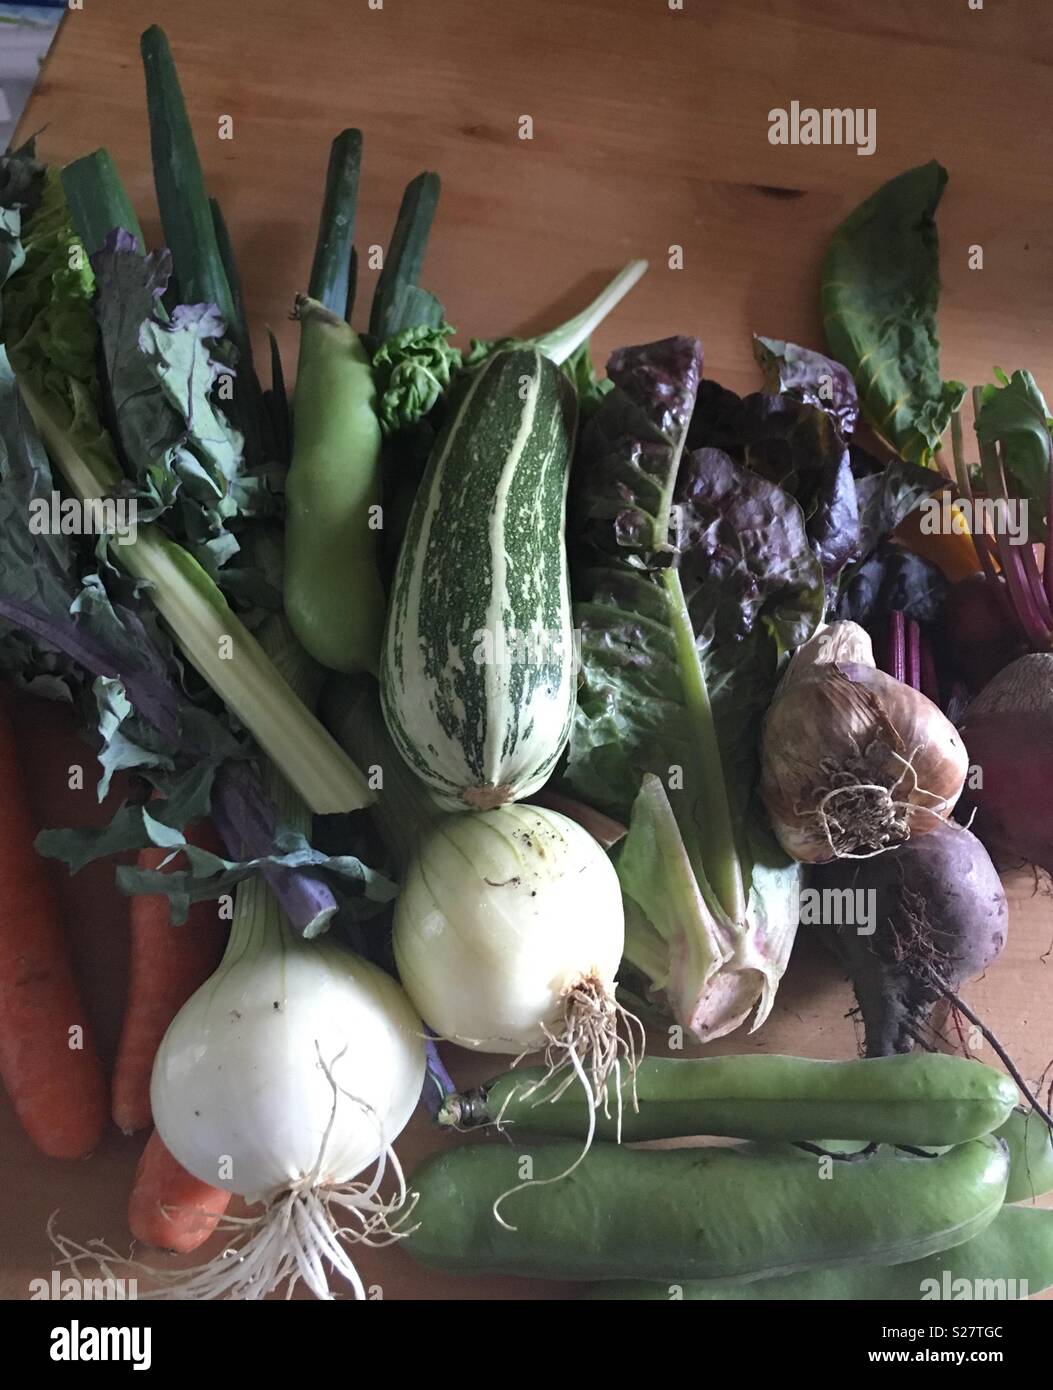 Organic veg Stock Photo